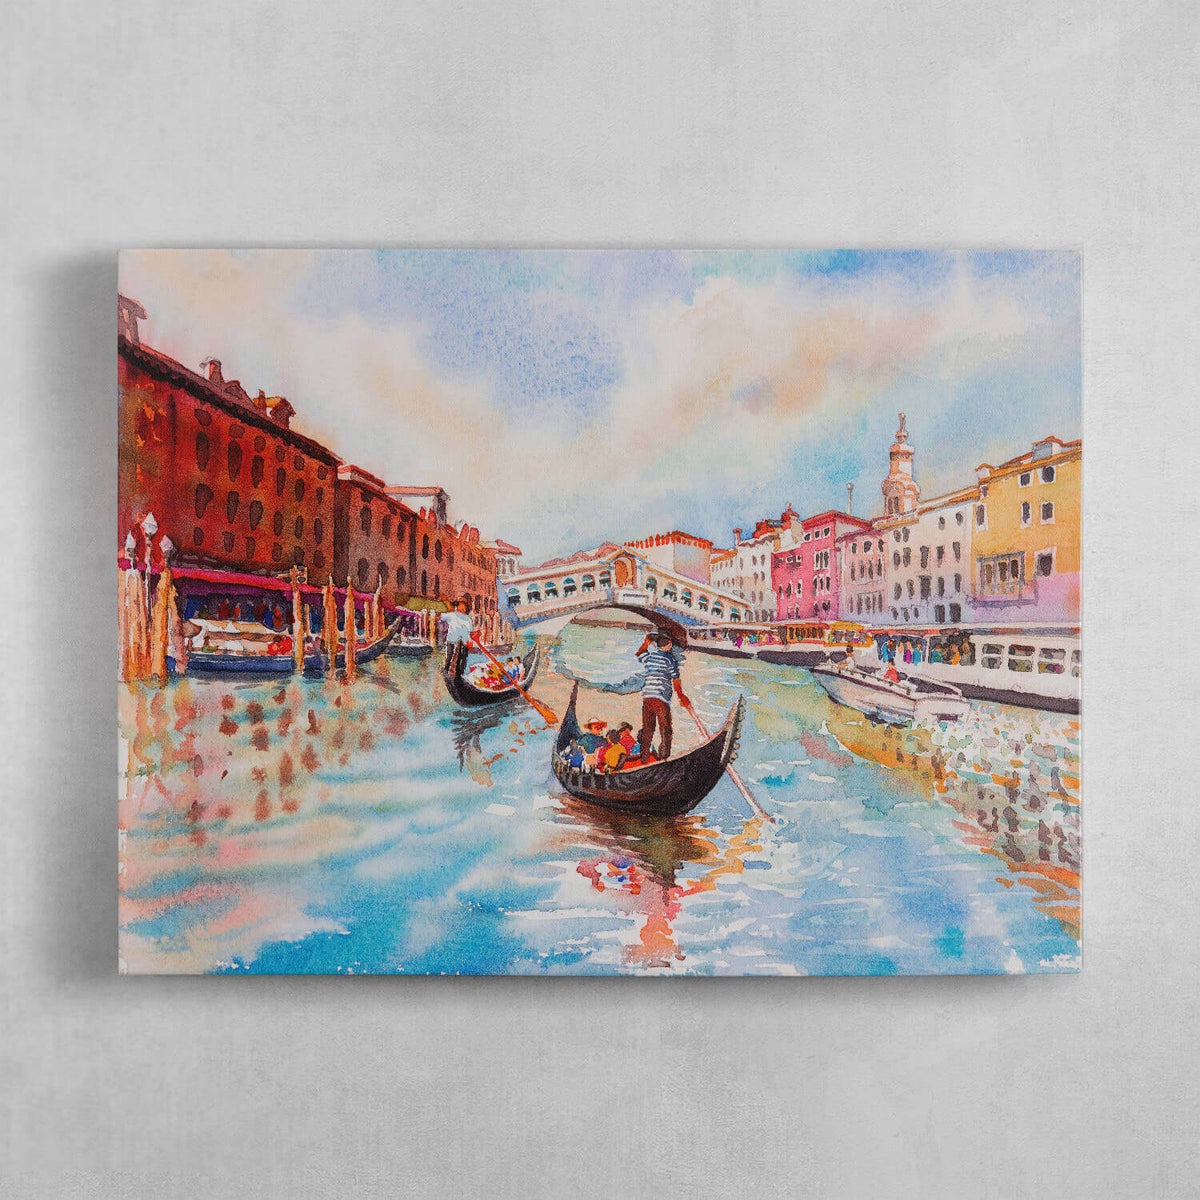 Venice Grand Canal